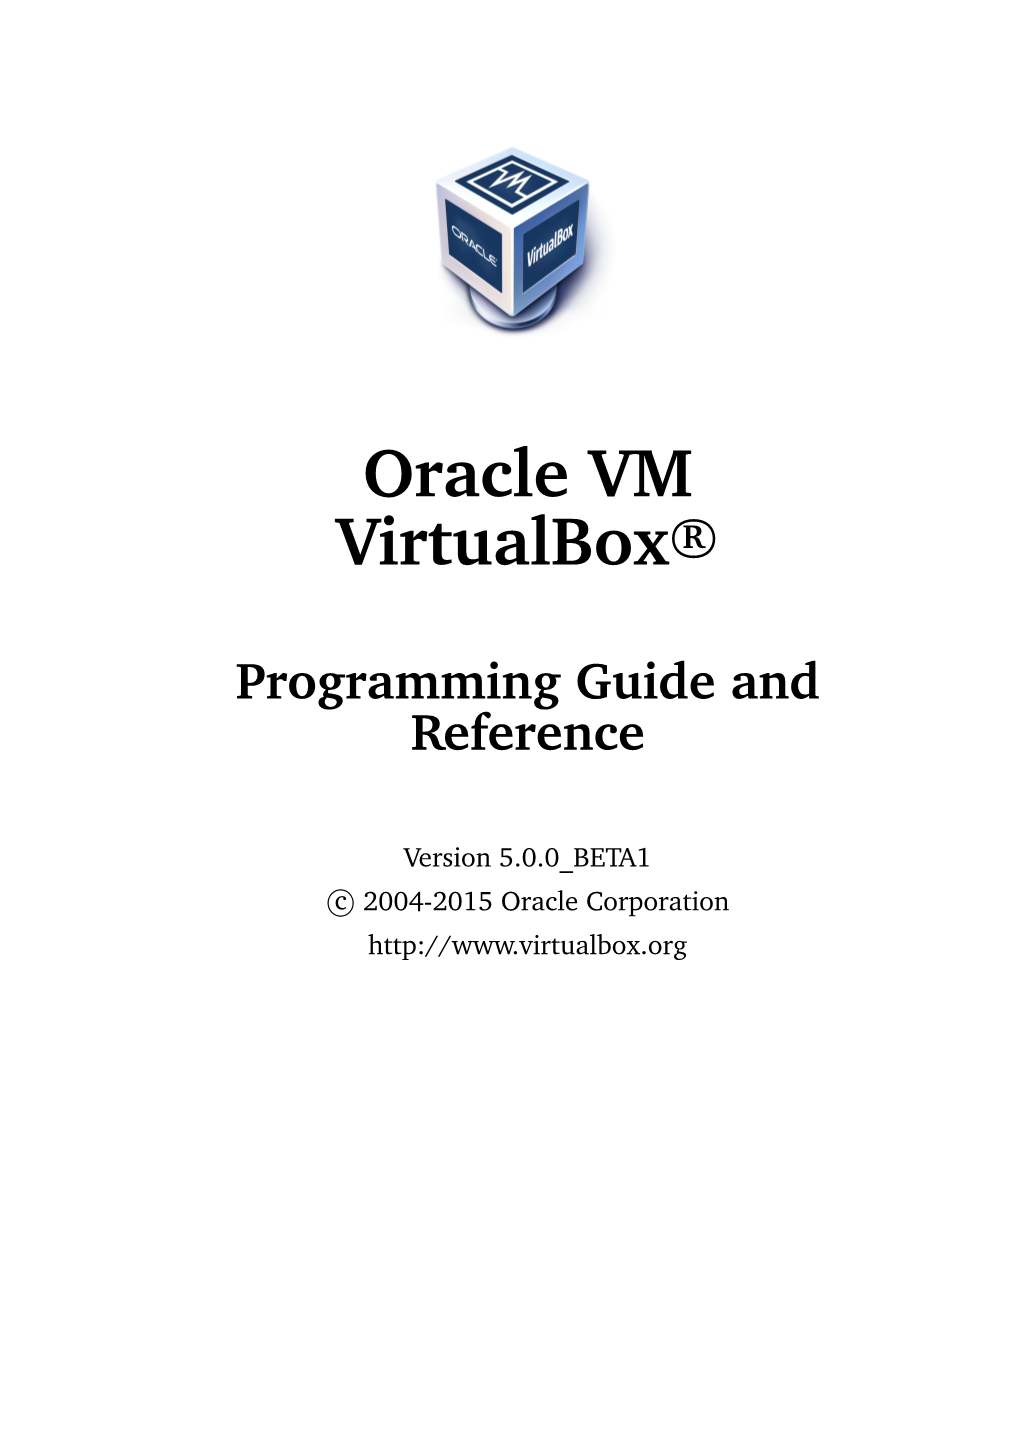 Oracle VM Virtualbox Programming Guide